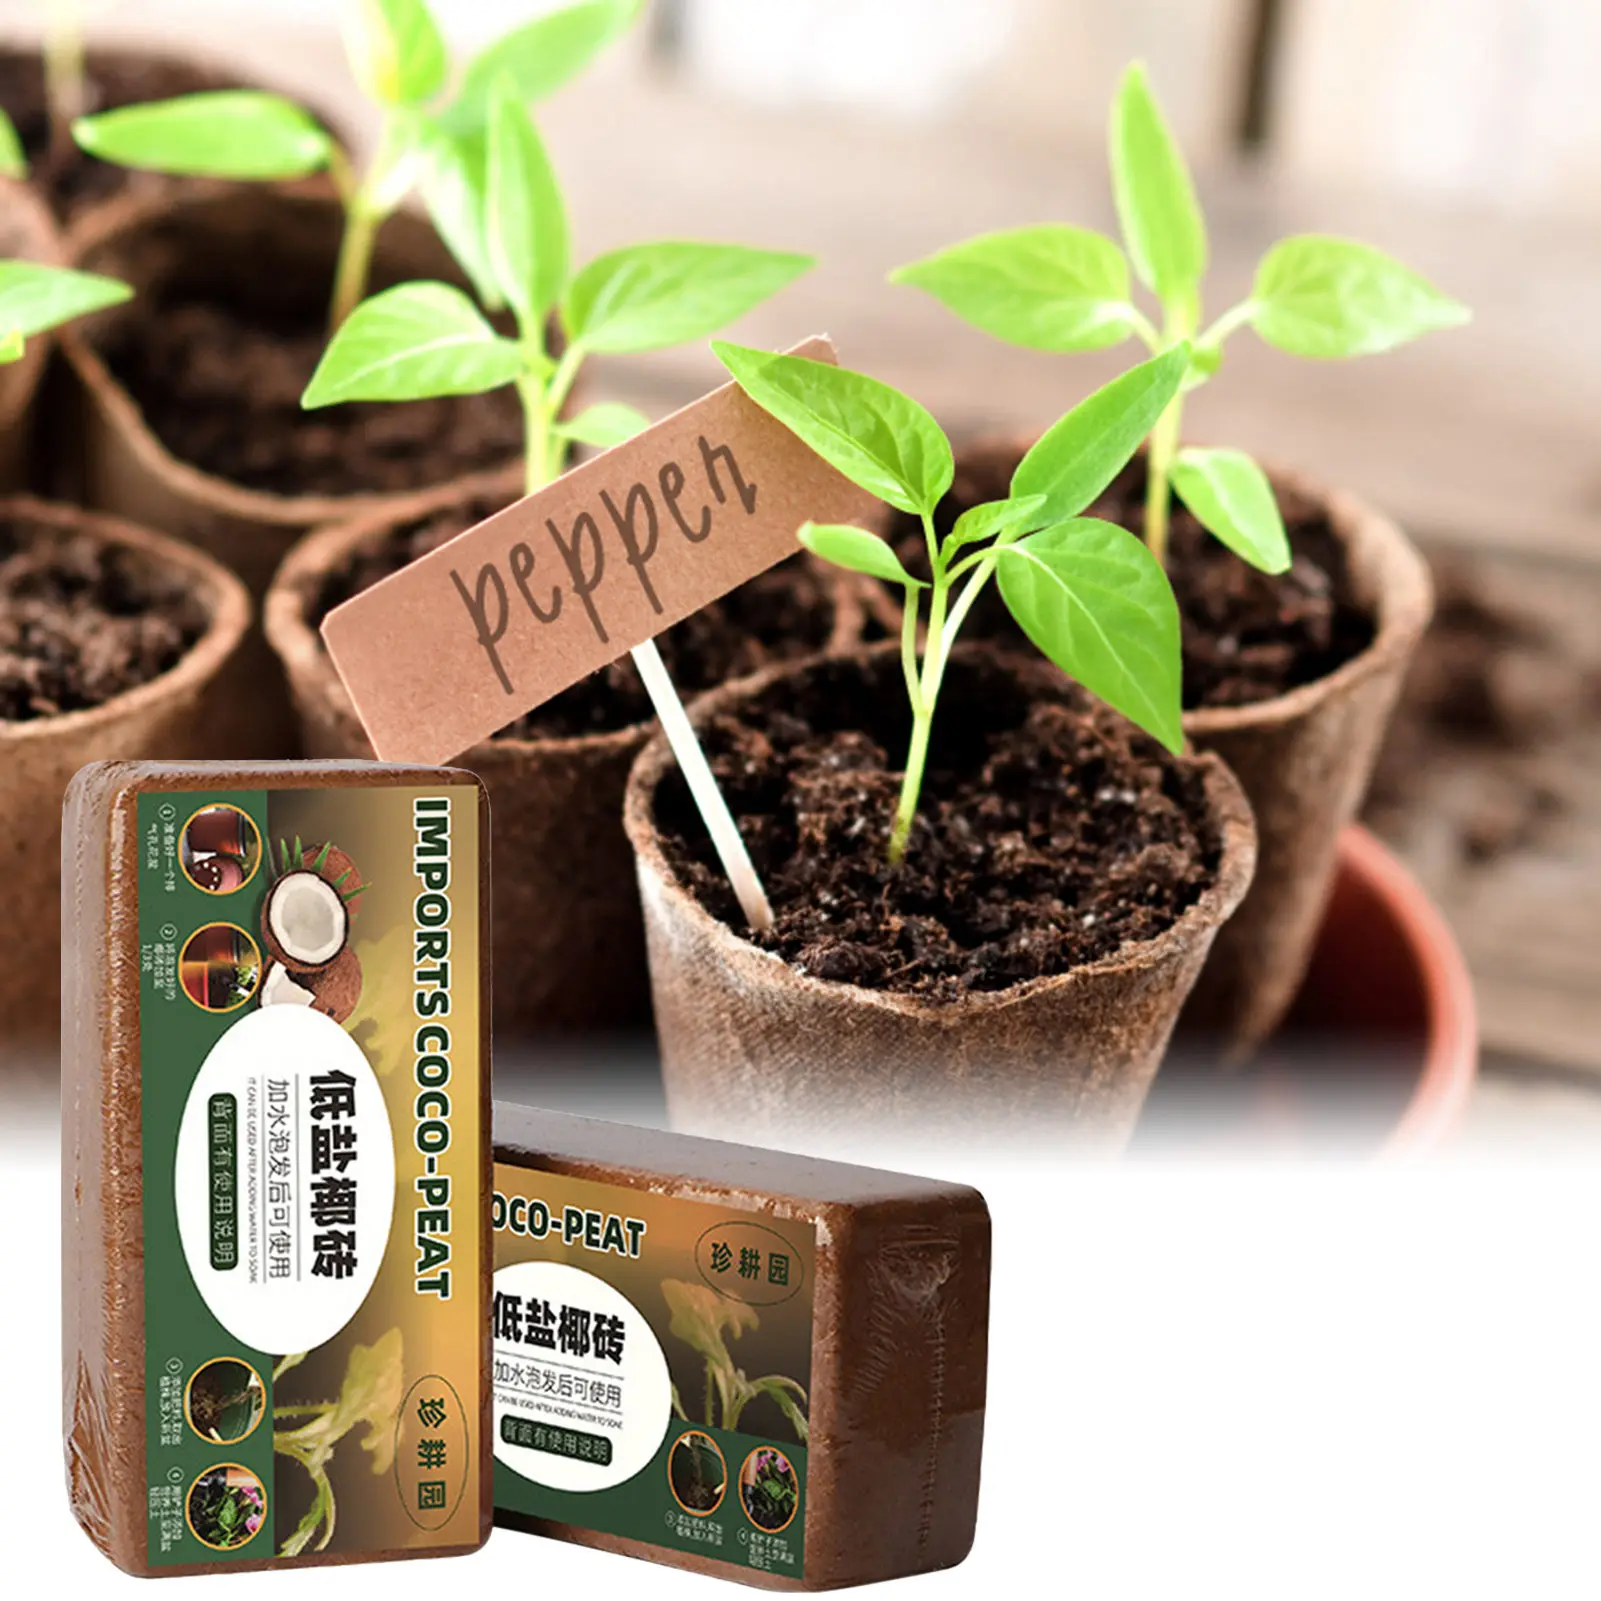 

Coconut Coir Expandable Coco Fiber Substrate For Plants Organic Garden Coir Bricks Plant Soil For Vegetables Flowers Herbs